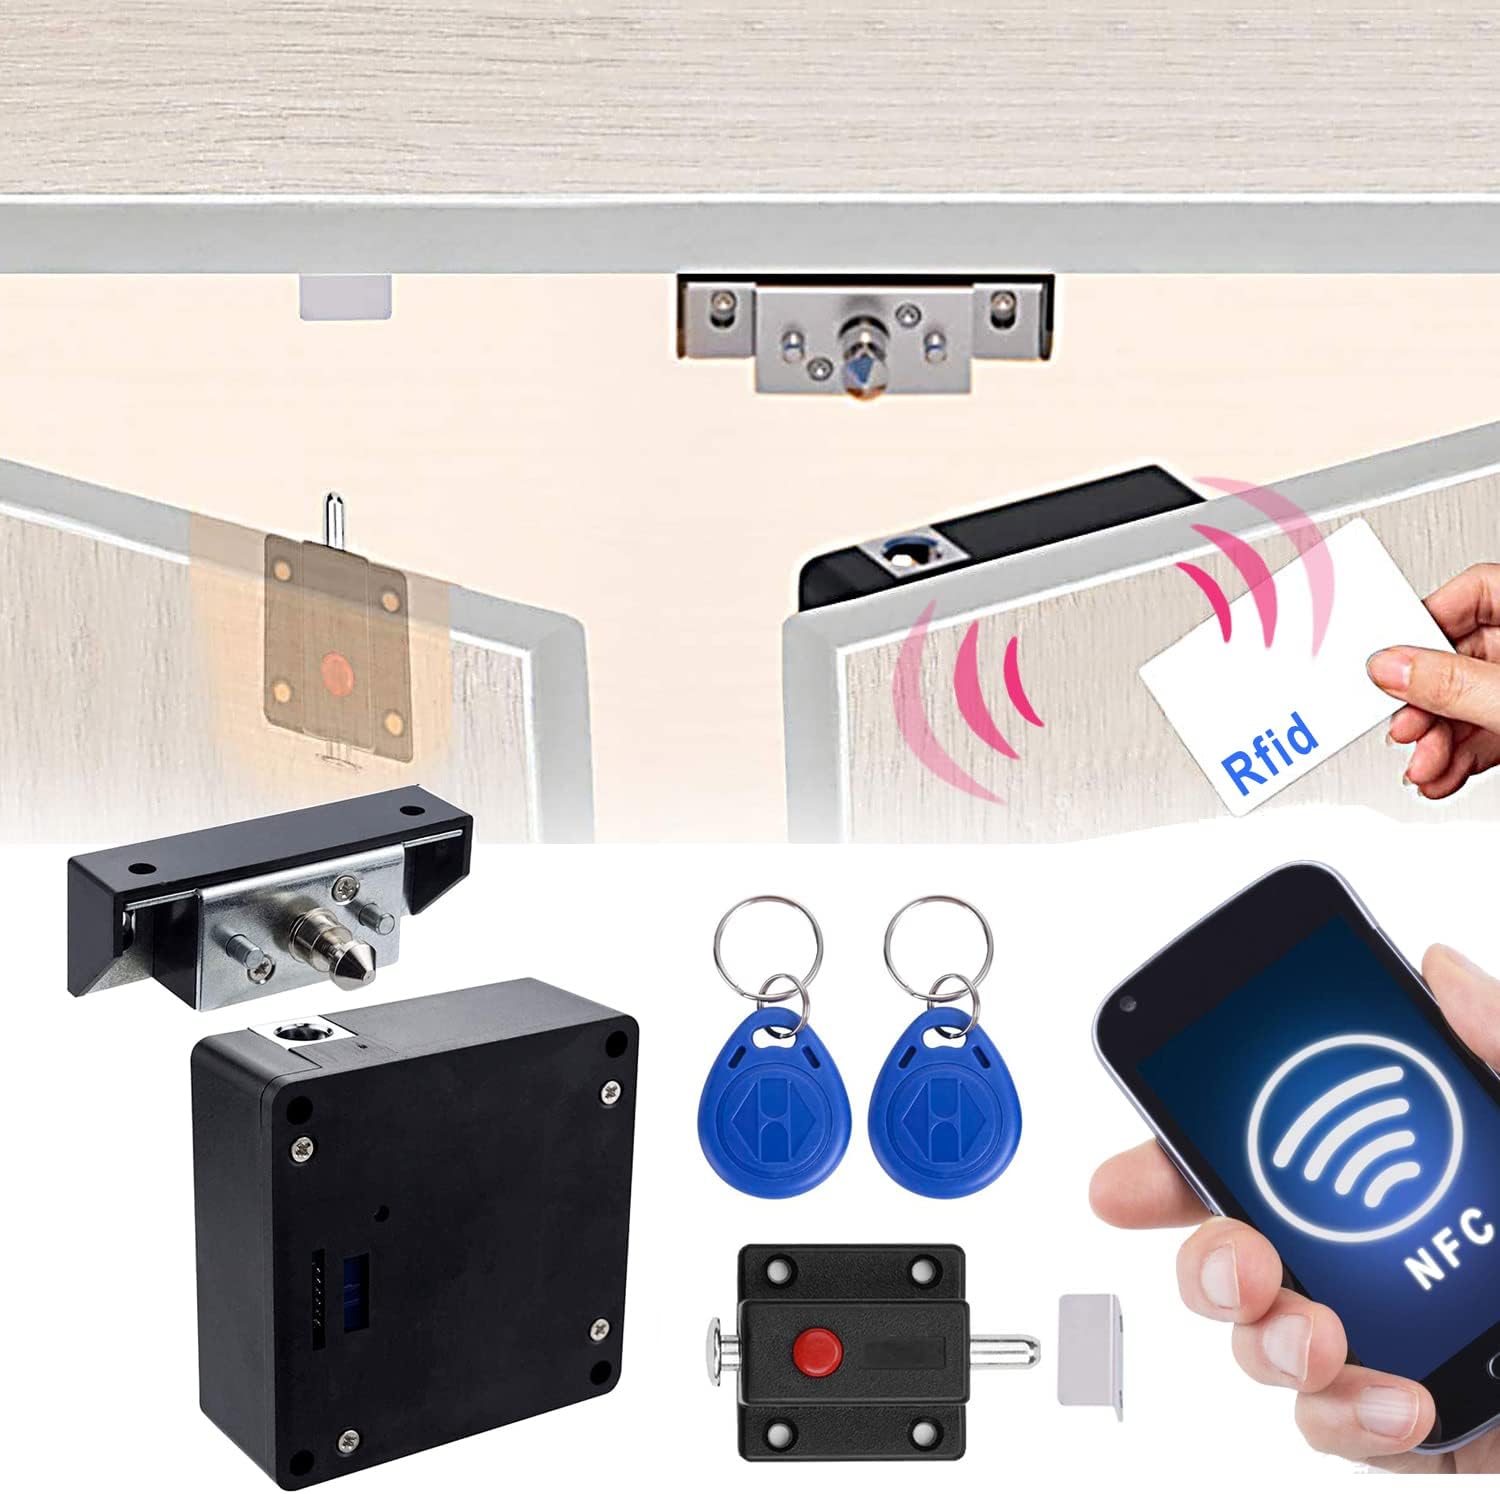 codace Electronic Cabinet Lock, Smart NFC RFID Locks, Hidden DIY Cabinet Lock with Slide Latch Lock for Double Door Cabinet Drawer Woo